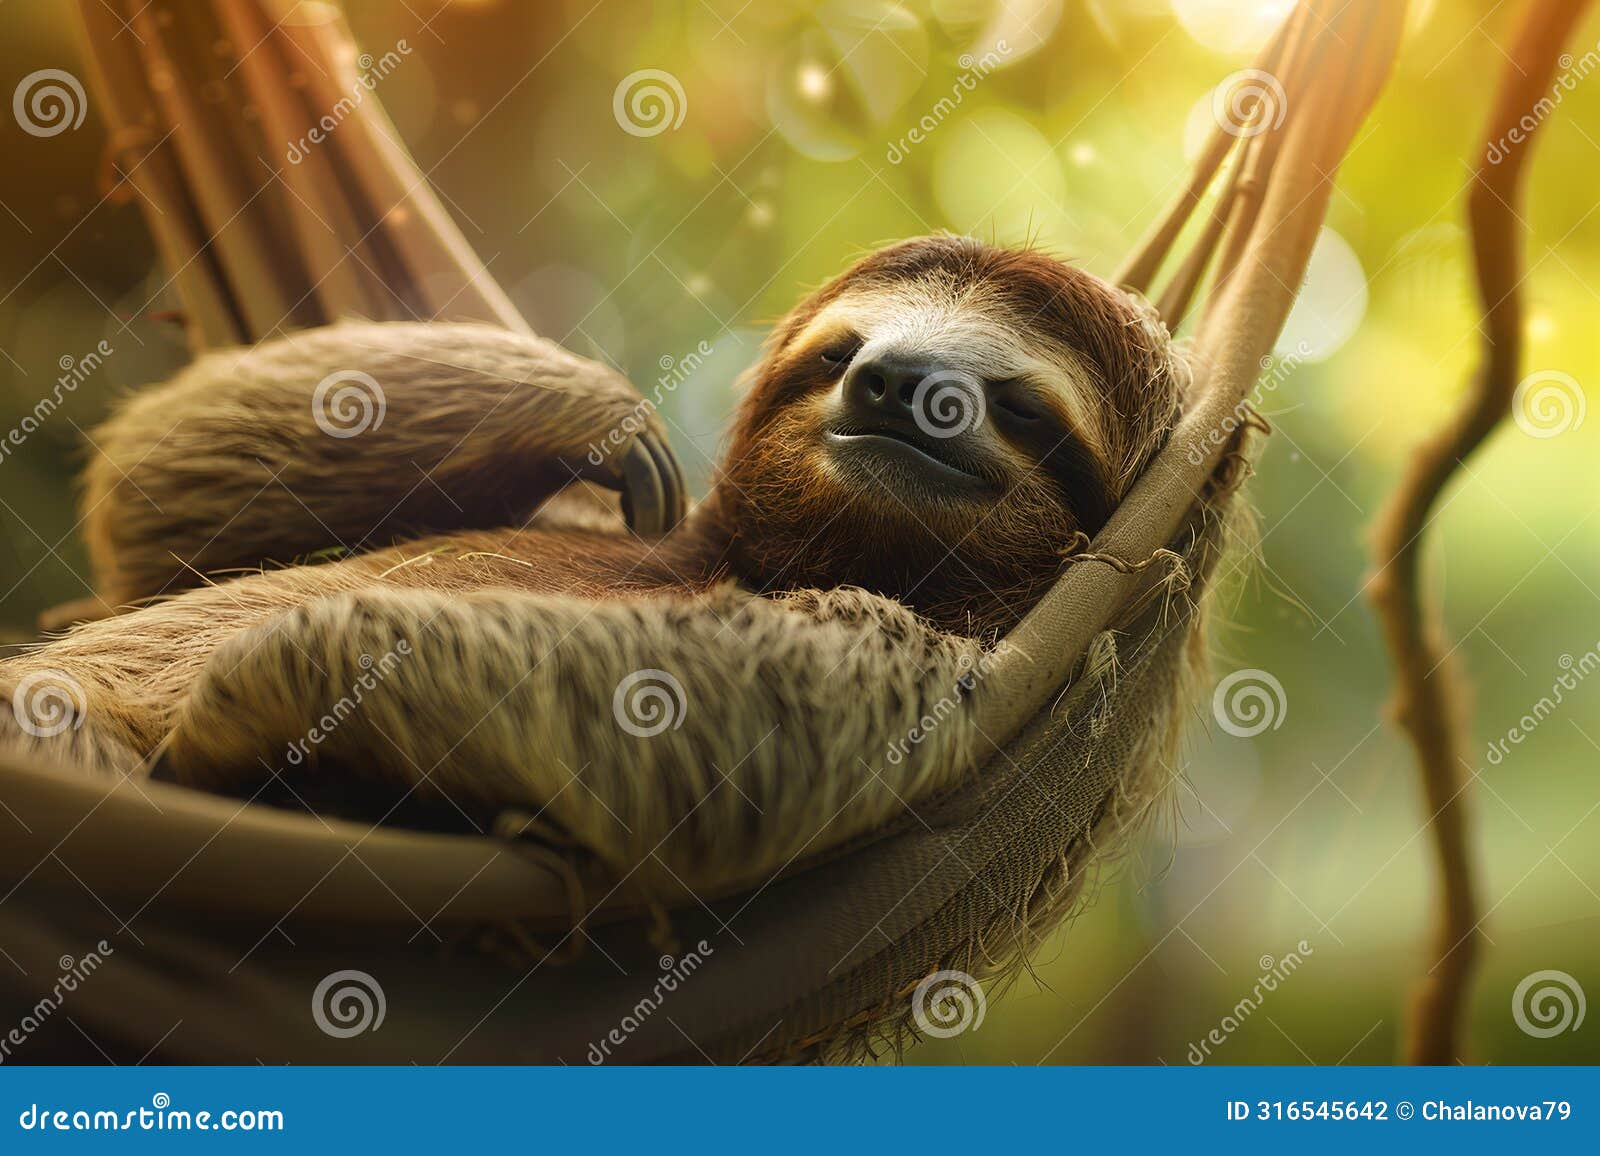 closeup view of a beautiful cute sloth relaxing in hammock in its natural habitat